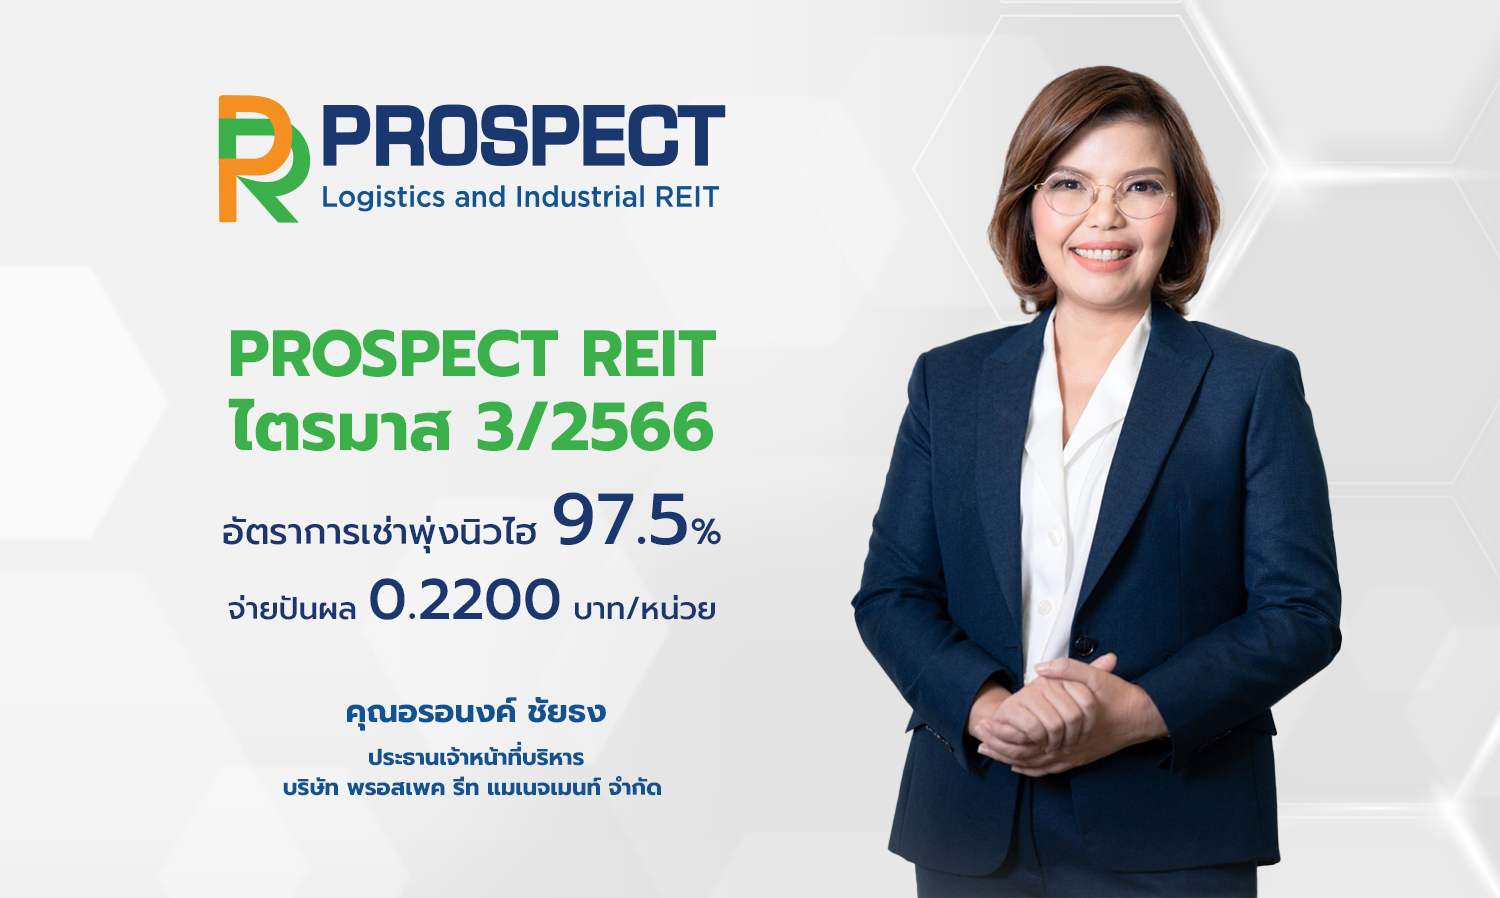 PROSPECT REIT ท็อปฟอร์มไตรมาส 3/2566 อัตราการเช่าพุ่งนิวไฮ 97.5% จ่ายปันผล 0.2200 บาท/หน่วย